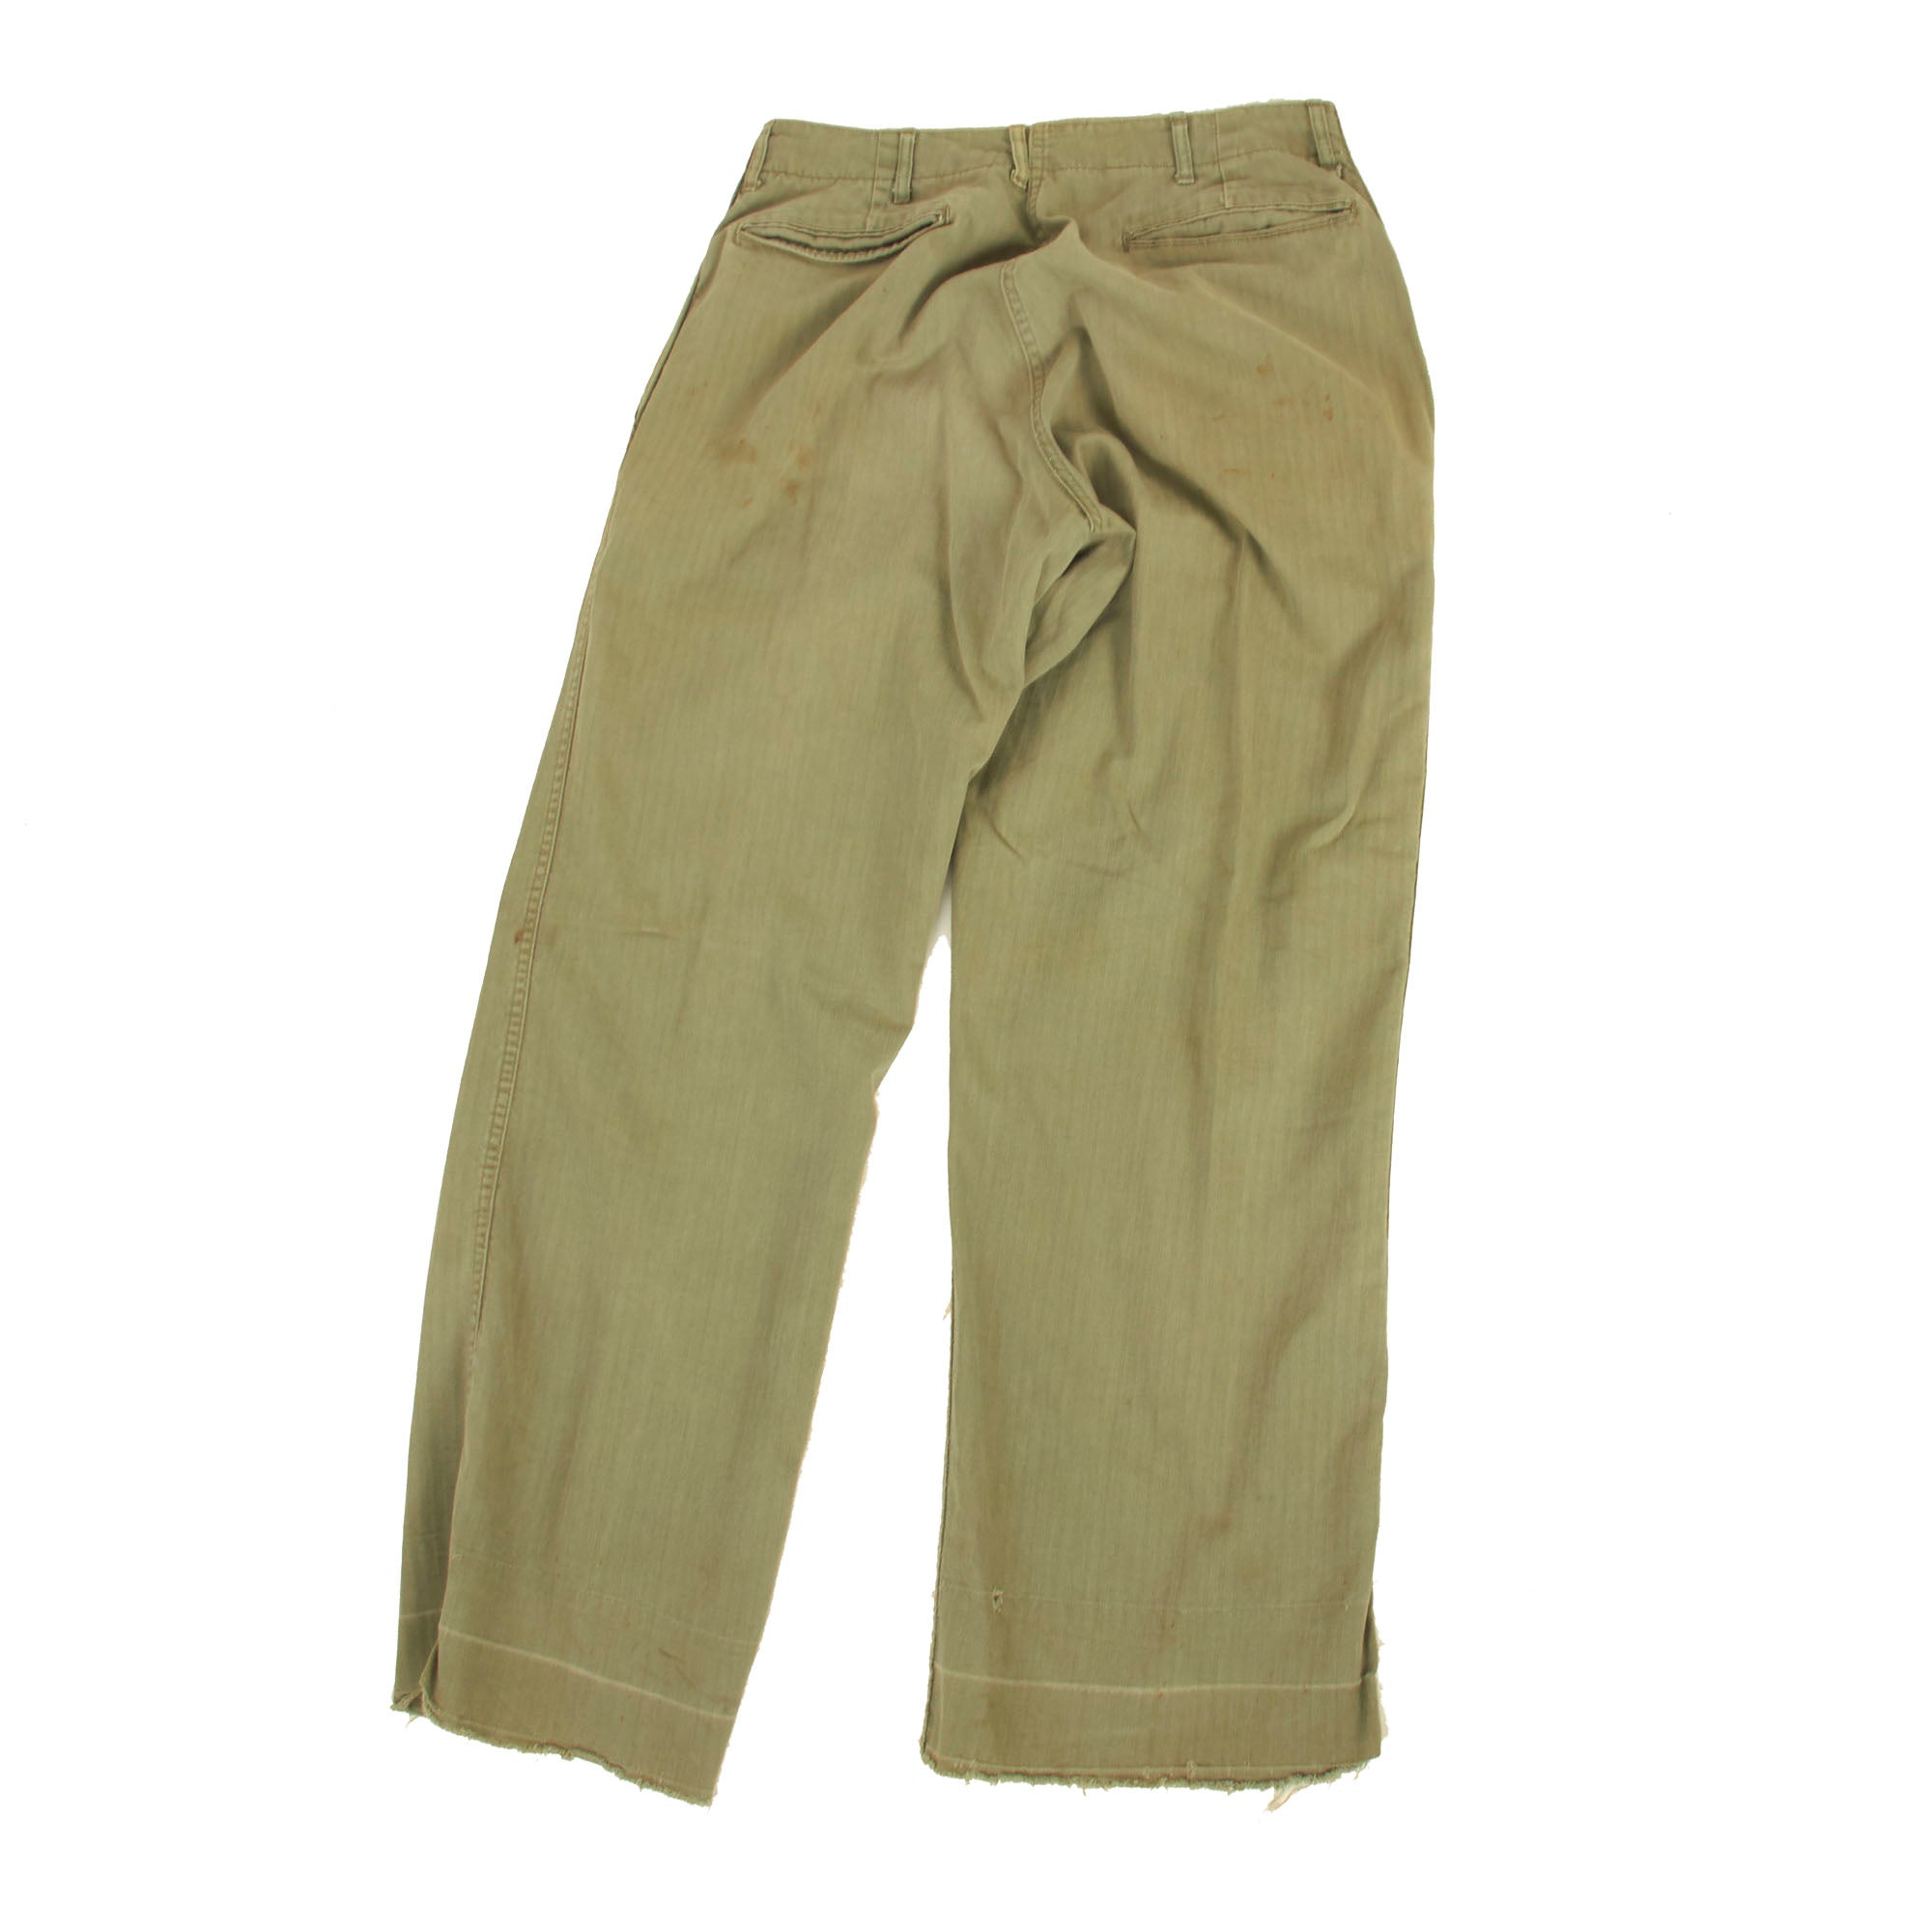 Twill Pants [PA521-TWILL-KHAKI] - FlynnO'Hara Uniforms